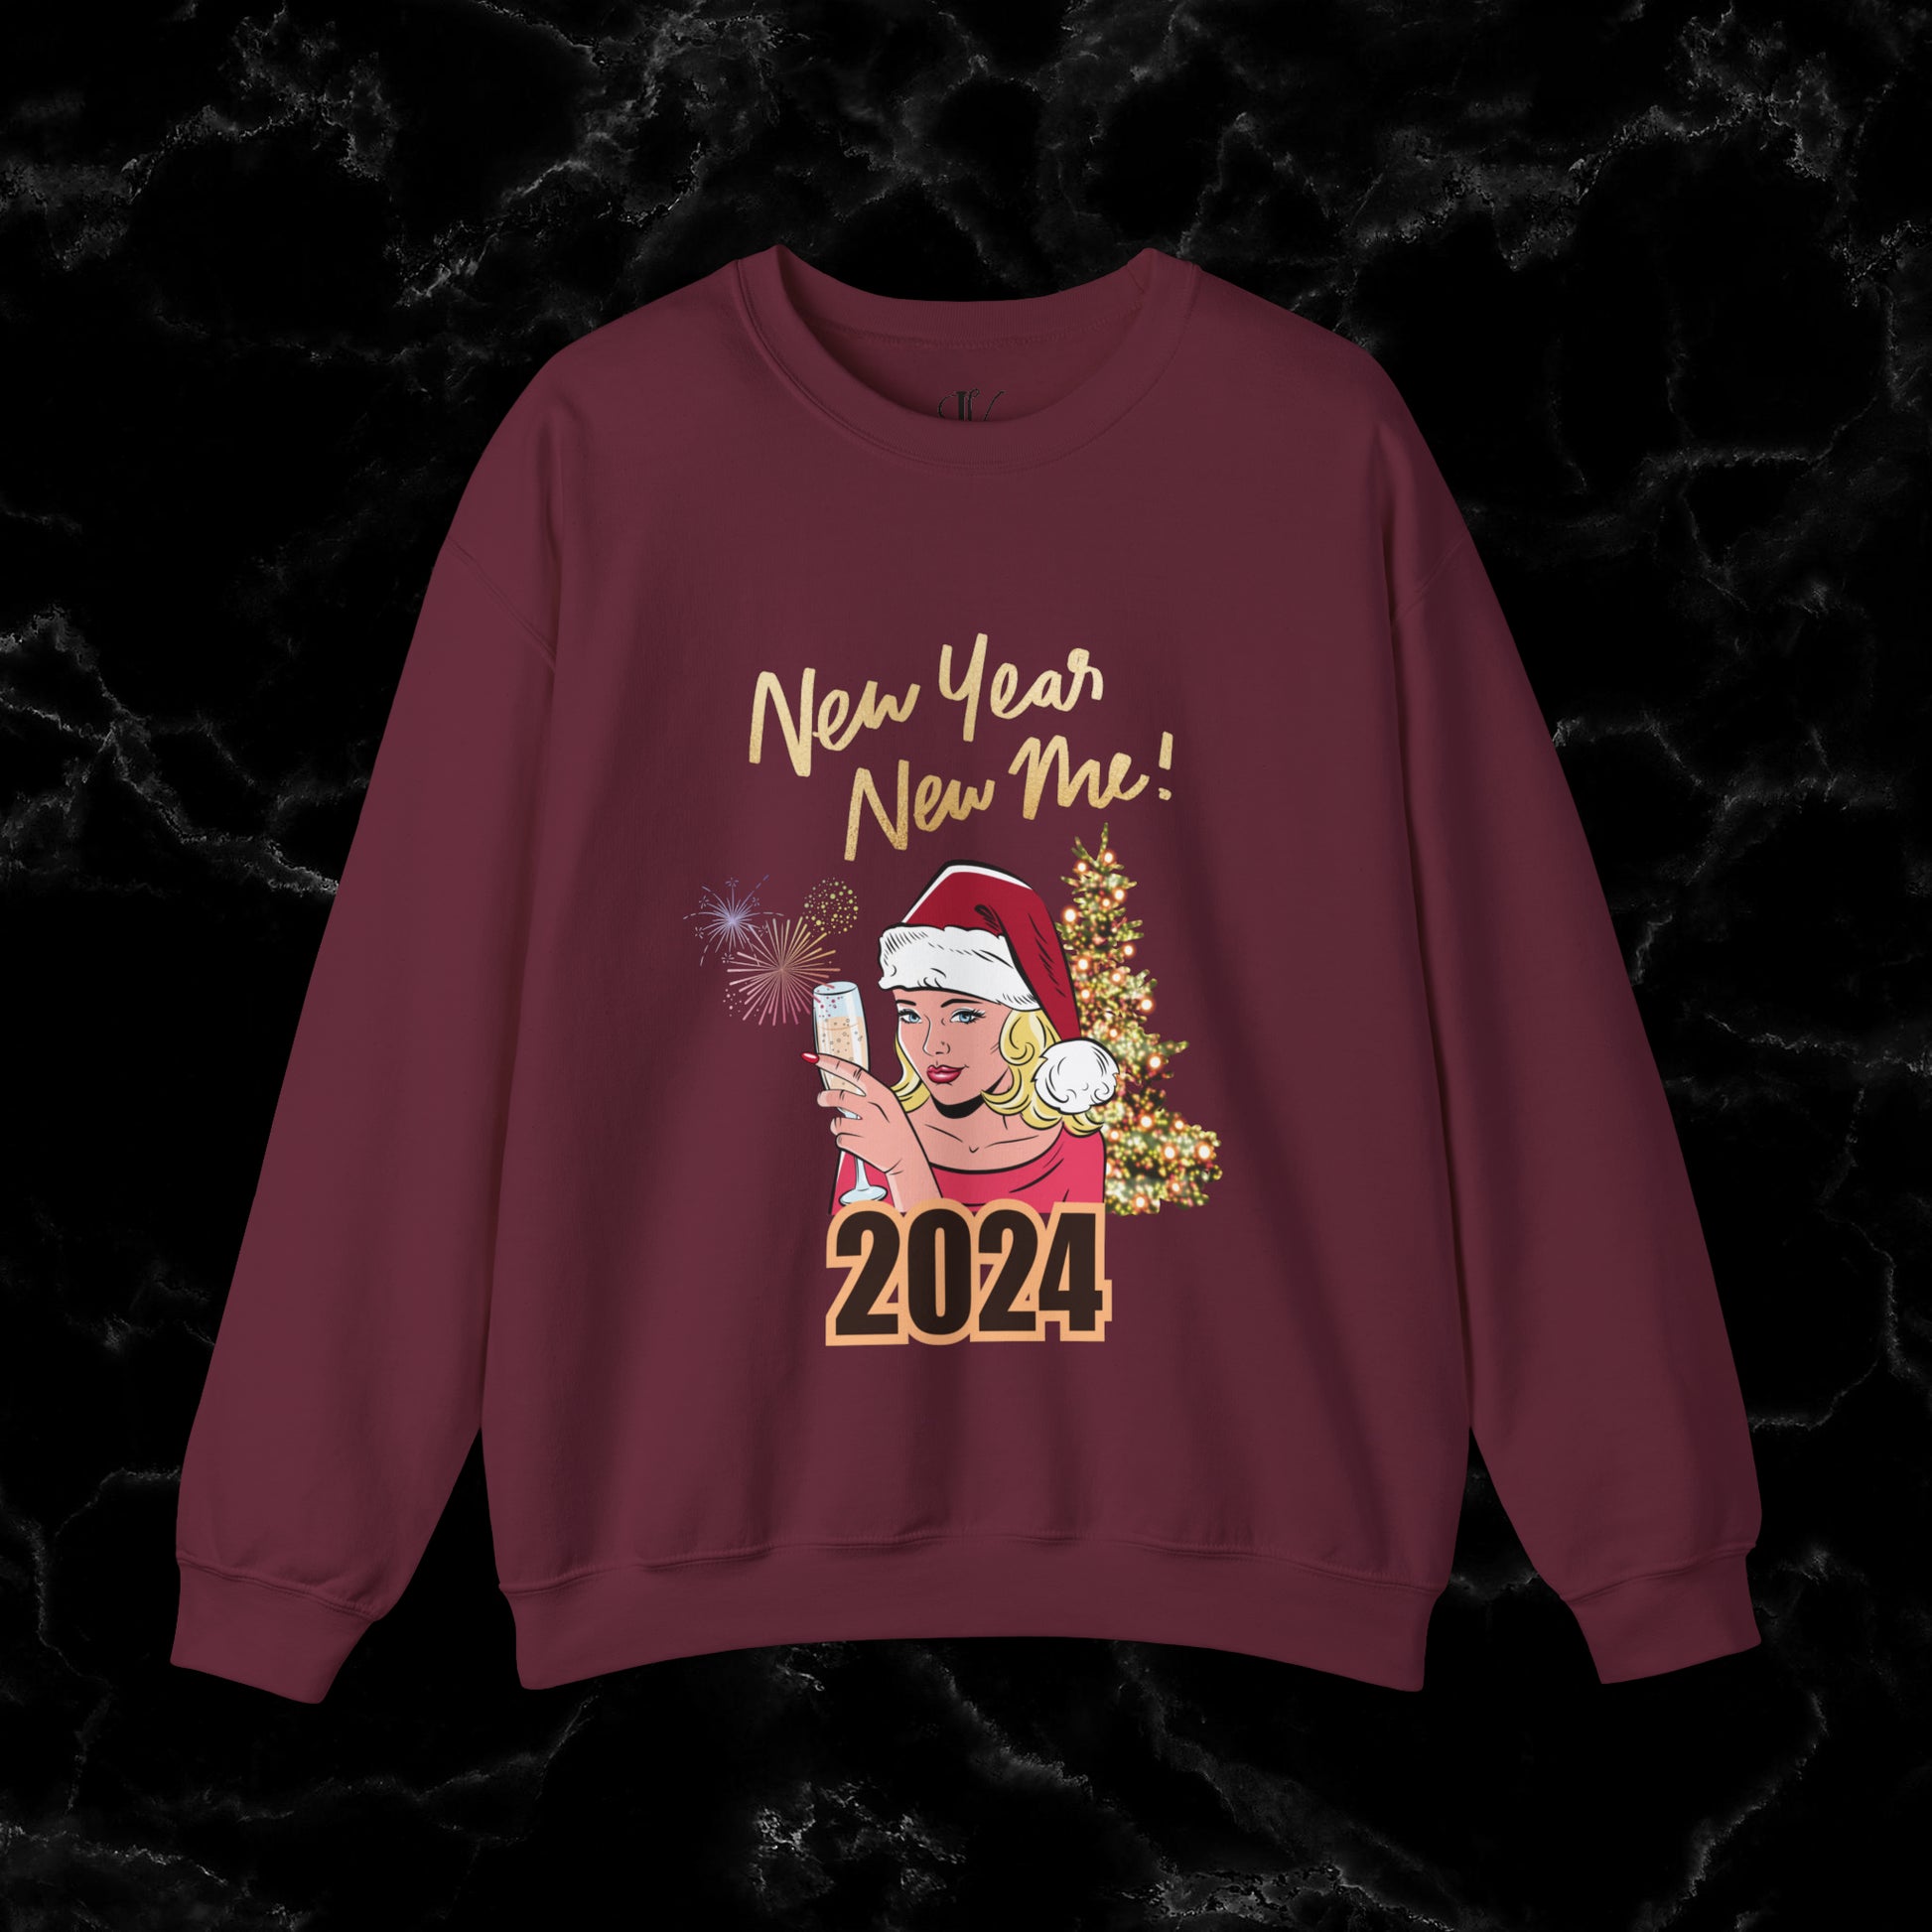 New Year New Me Sweatshirt - Motivational, Inspirational Resolutions Shirt, Christmas Family Tee Sweatshirt S Maroon 